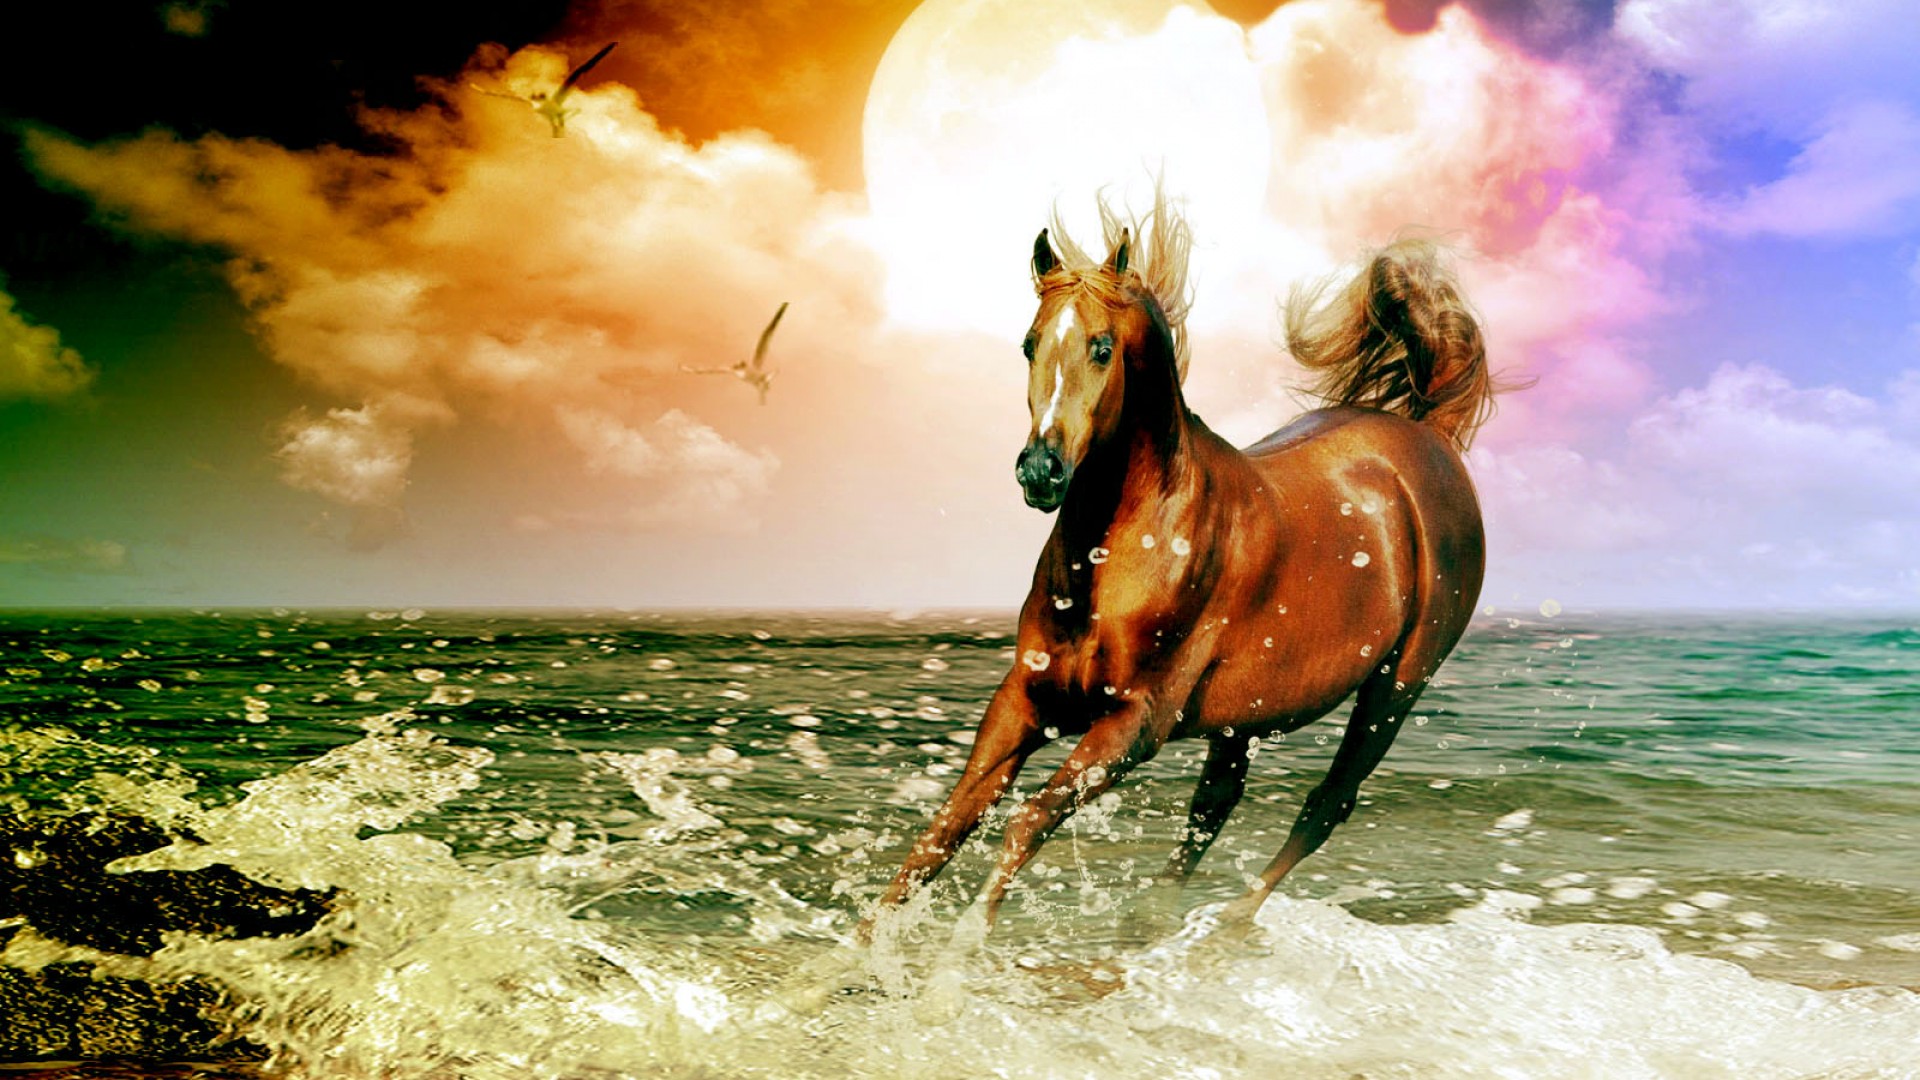 Arabian Horse Beach Desktop Wallpaper In High Resolution For